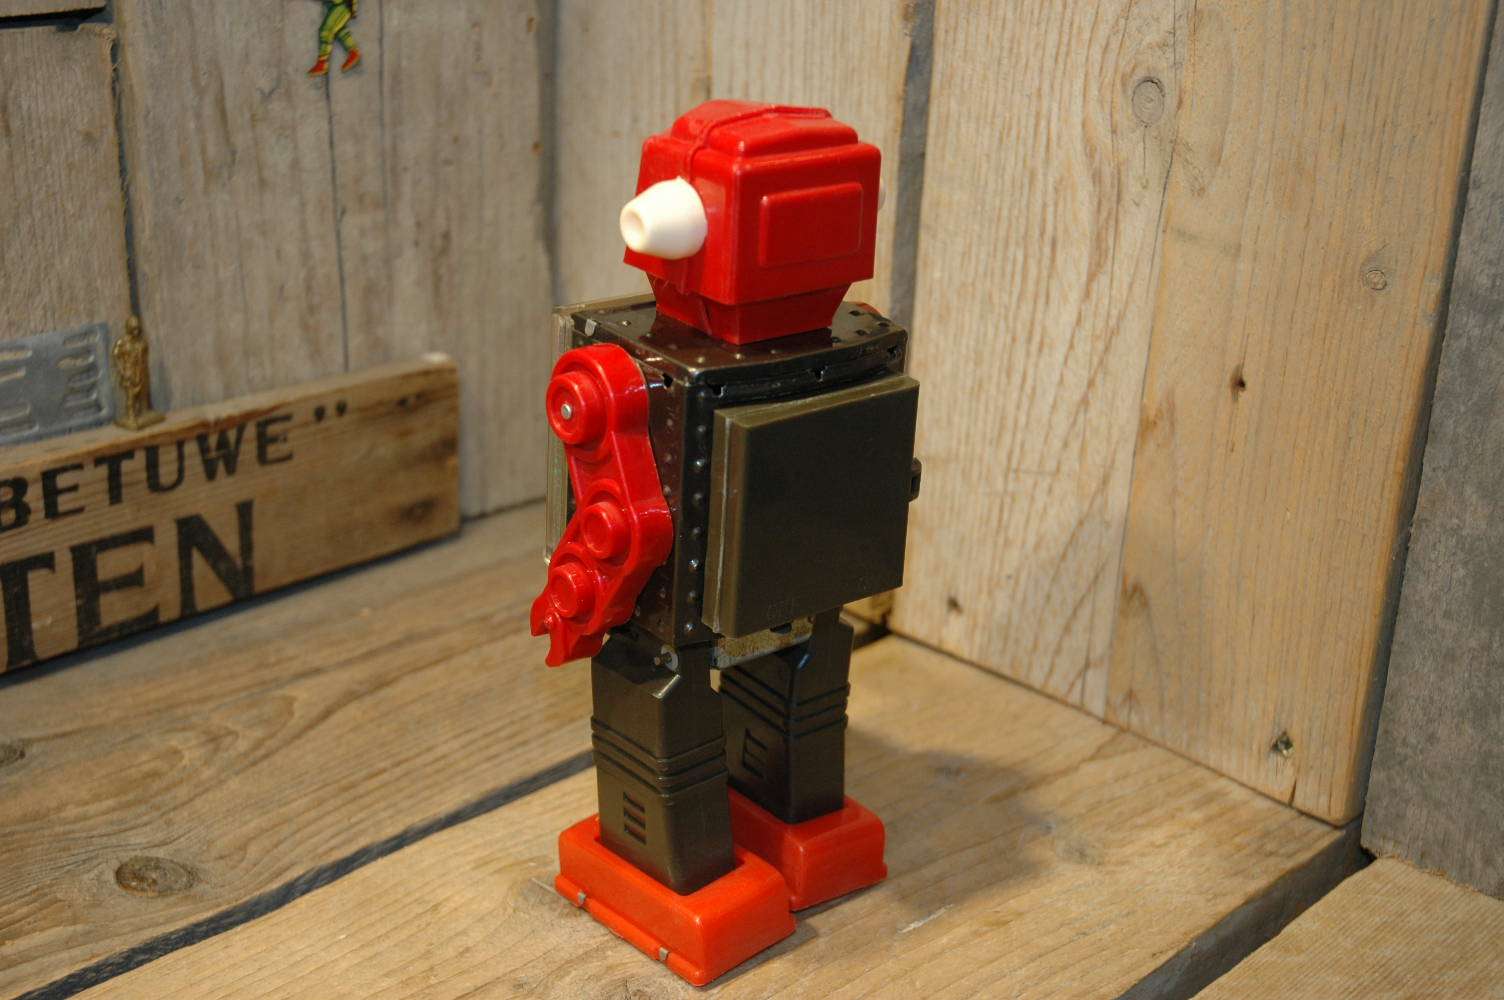 Horikawa - Engine Robot with Electronic Room